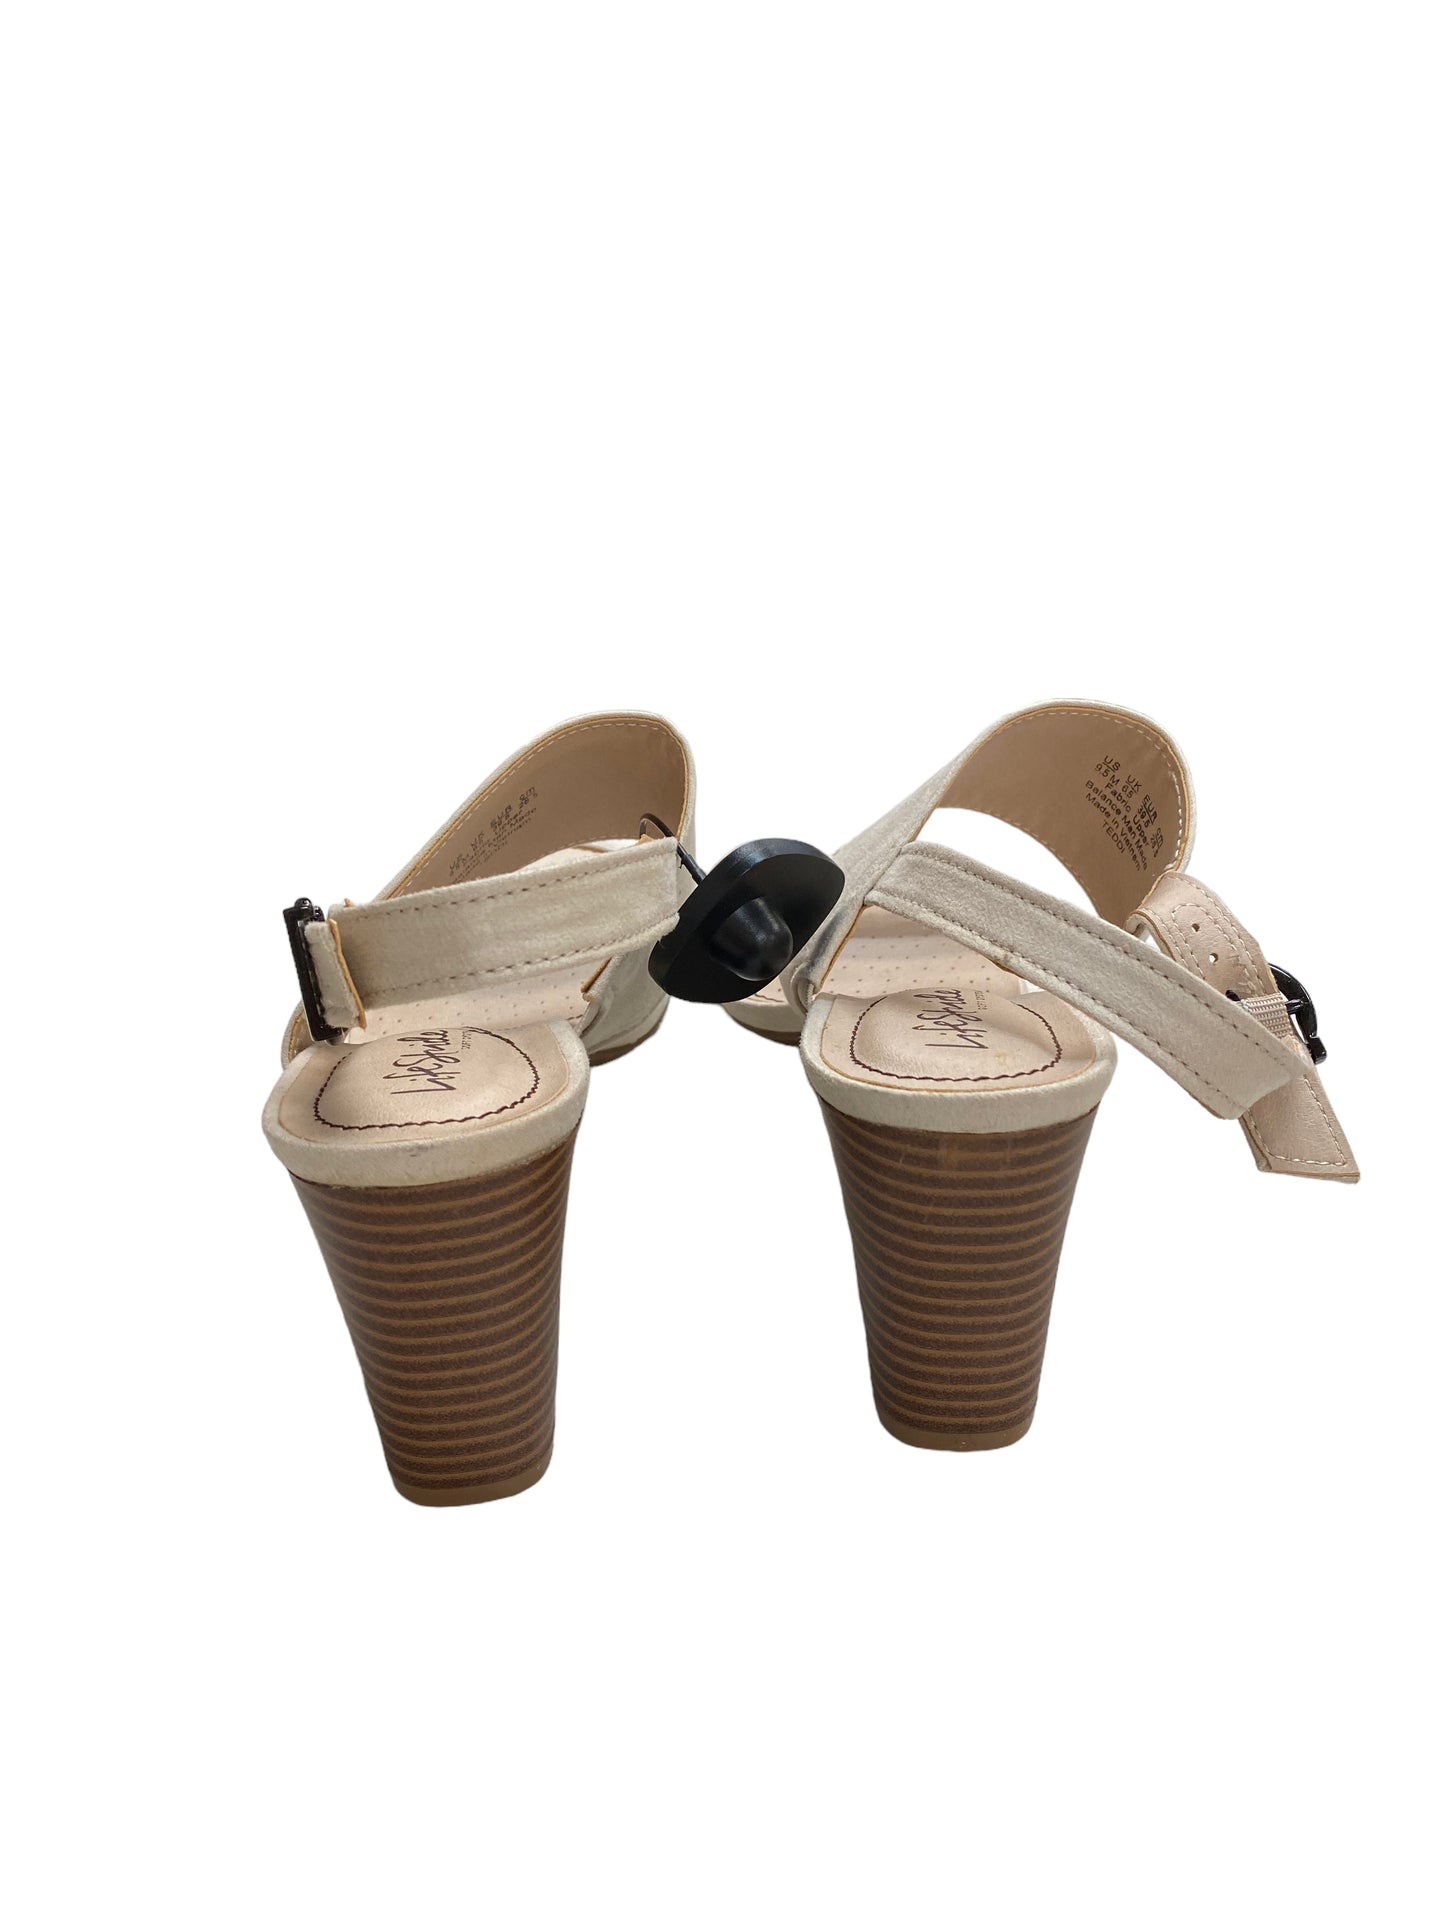 Cream Sandals Heels Block Life Stride, Size 9.5